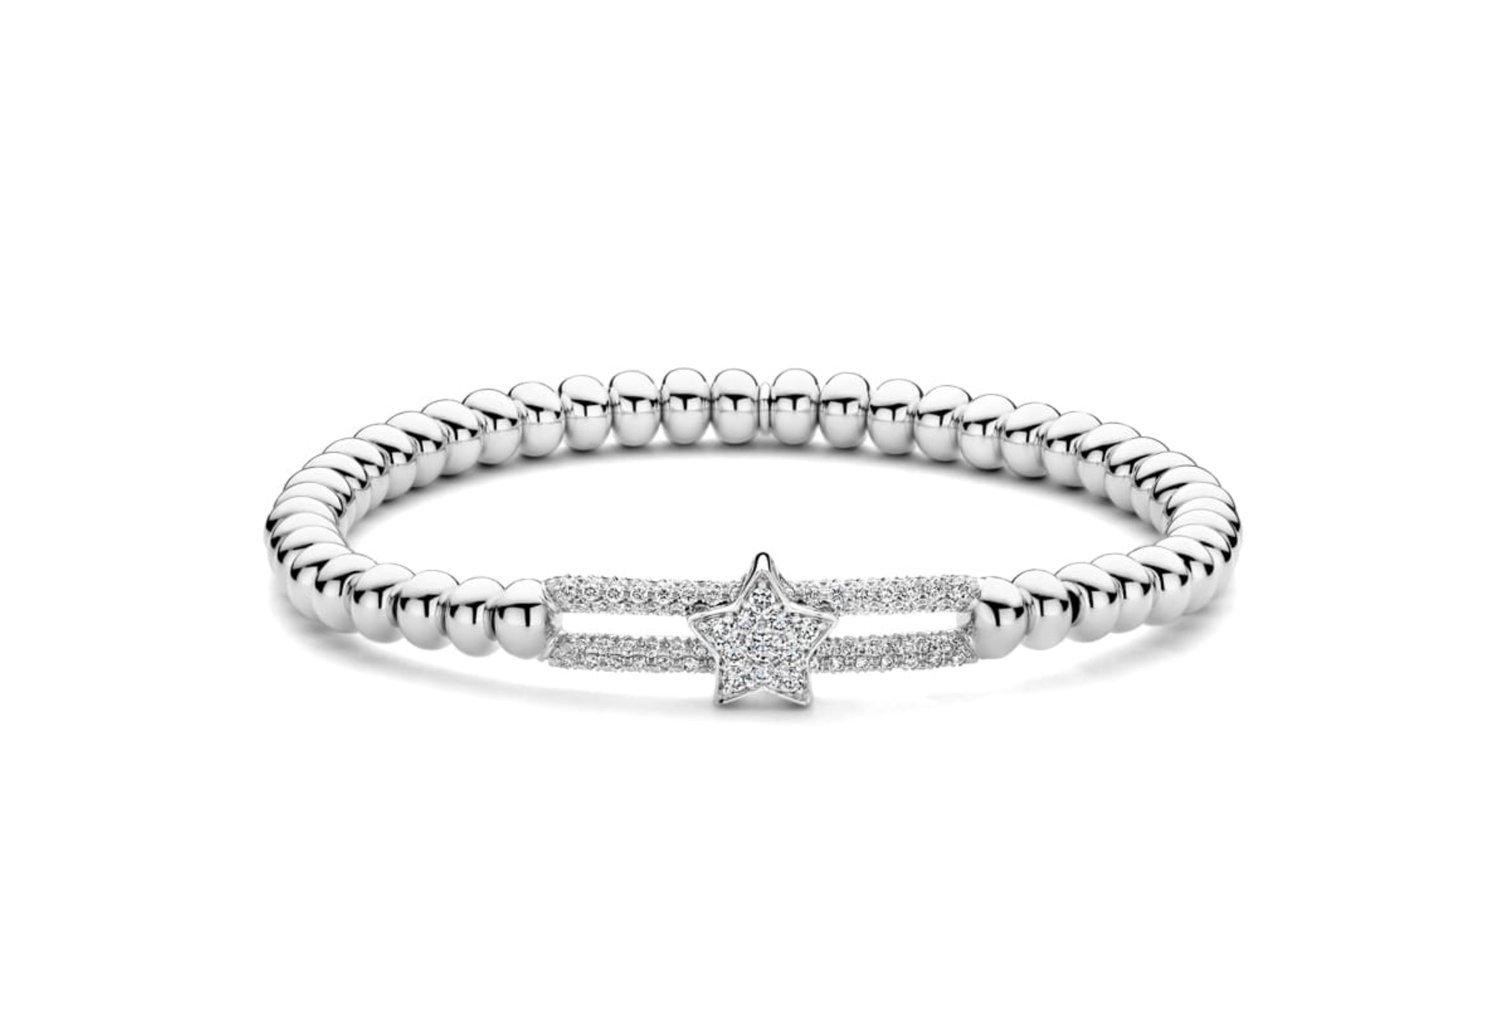 Hulchi Belluni "Tresore" Stretch Bracelet in 18kt White Gold with Star Diamond Station